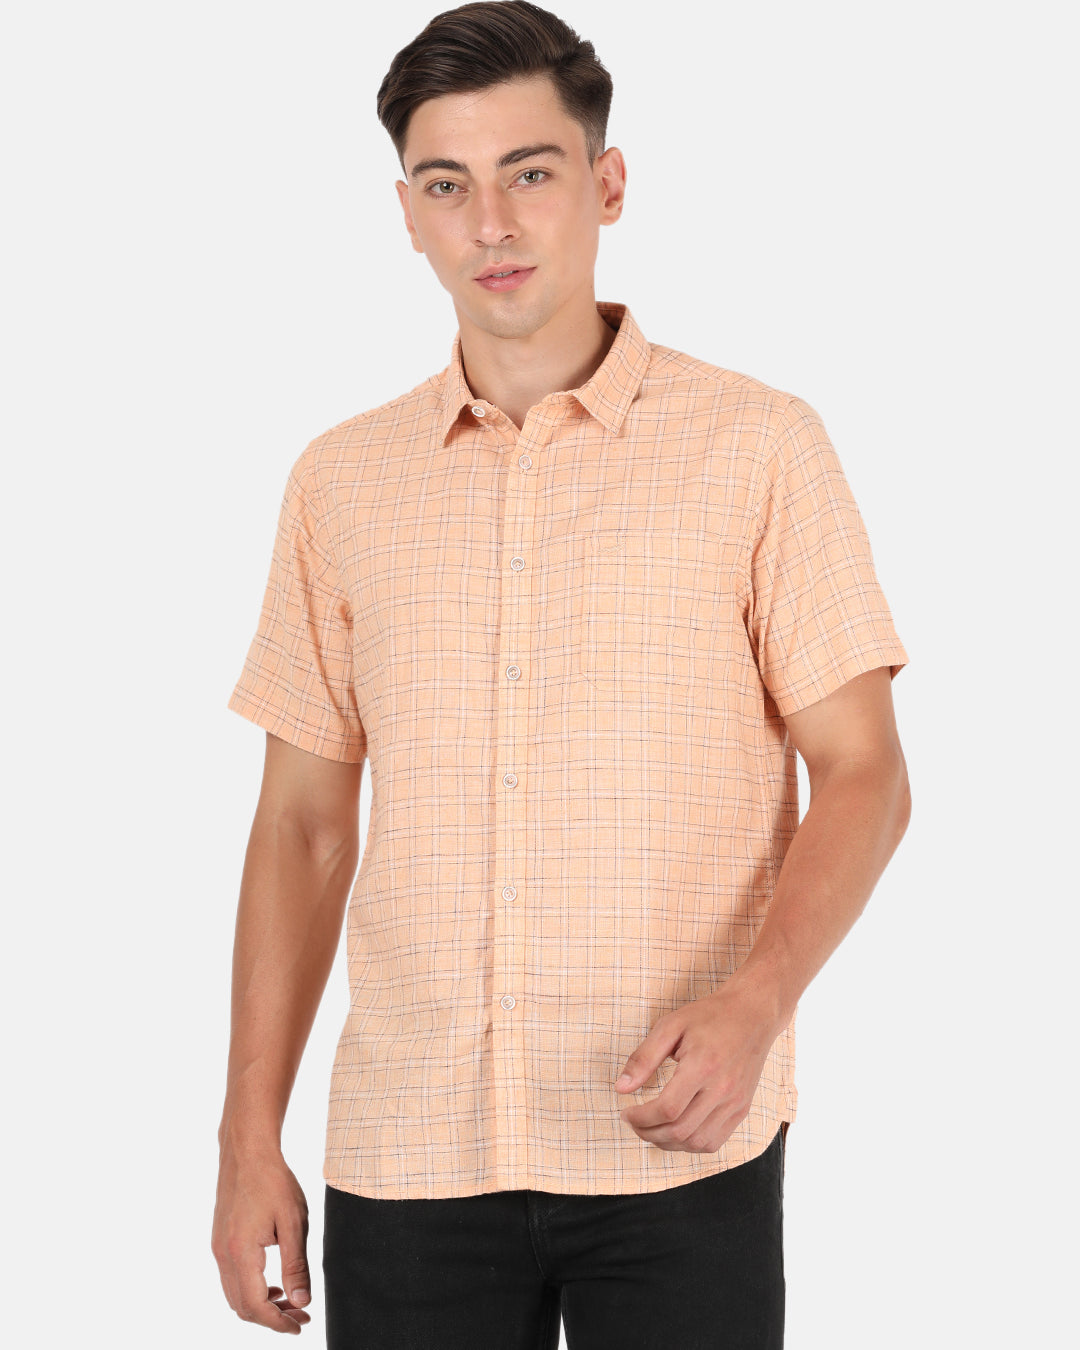 Crocodile Casual Full Sleeve Comfort Fit Checks Light Orange with Collar Shirt for Men